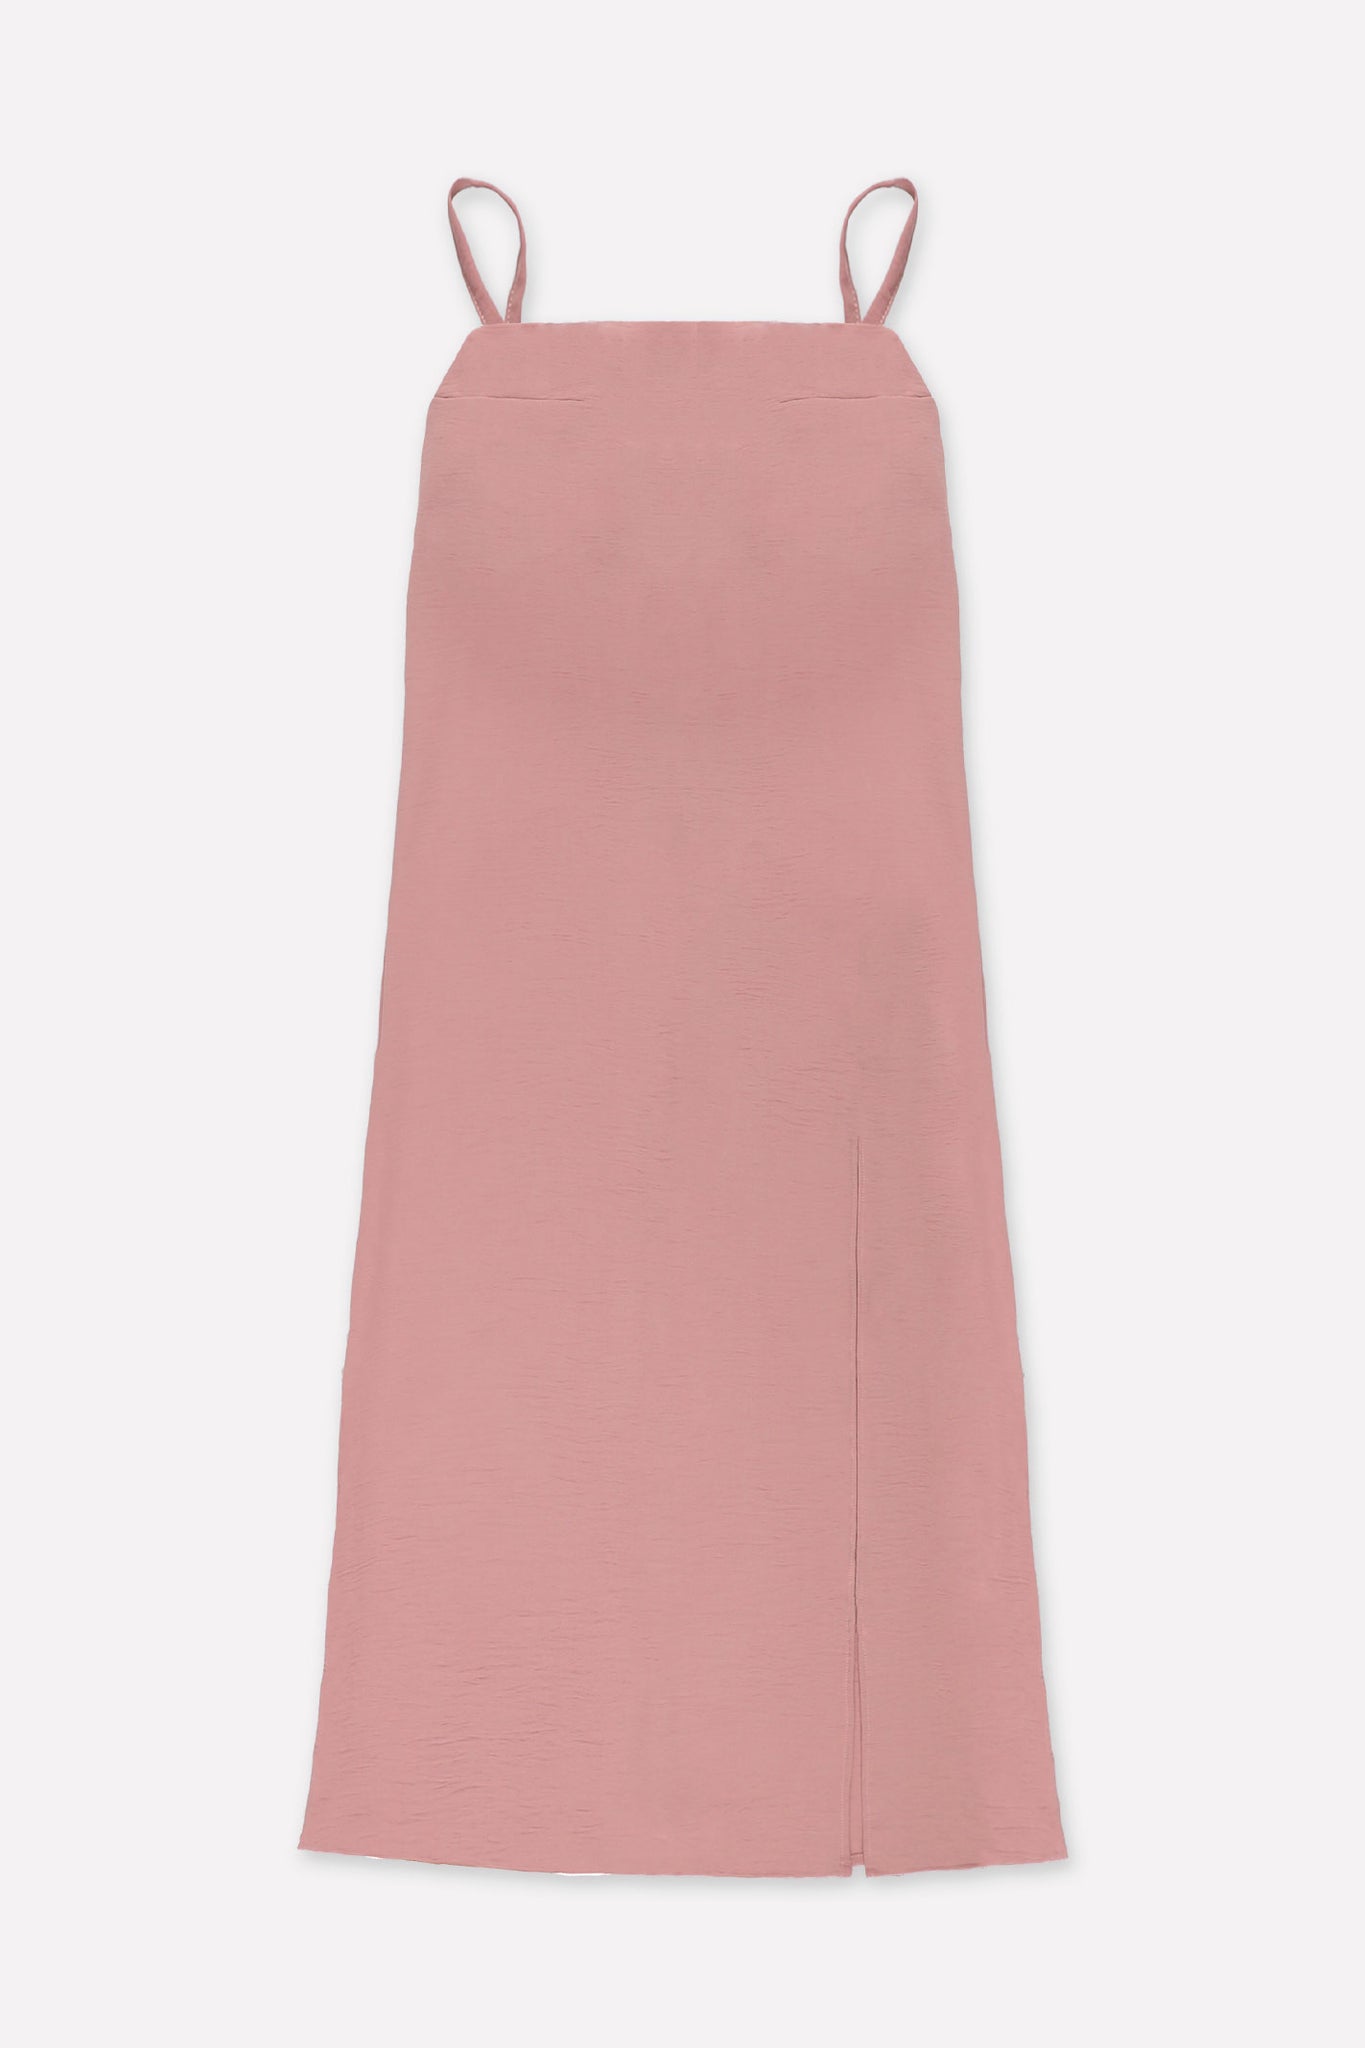 L.1193 - MOTION DRESS - Dusty Pink